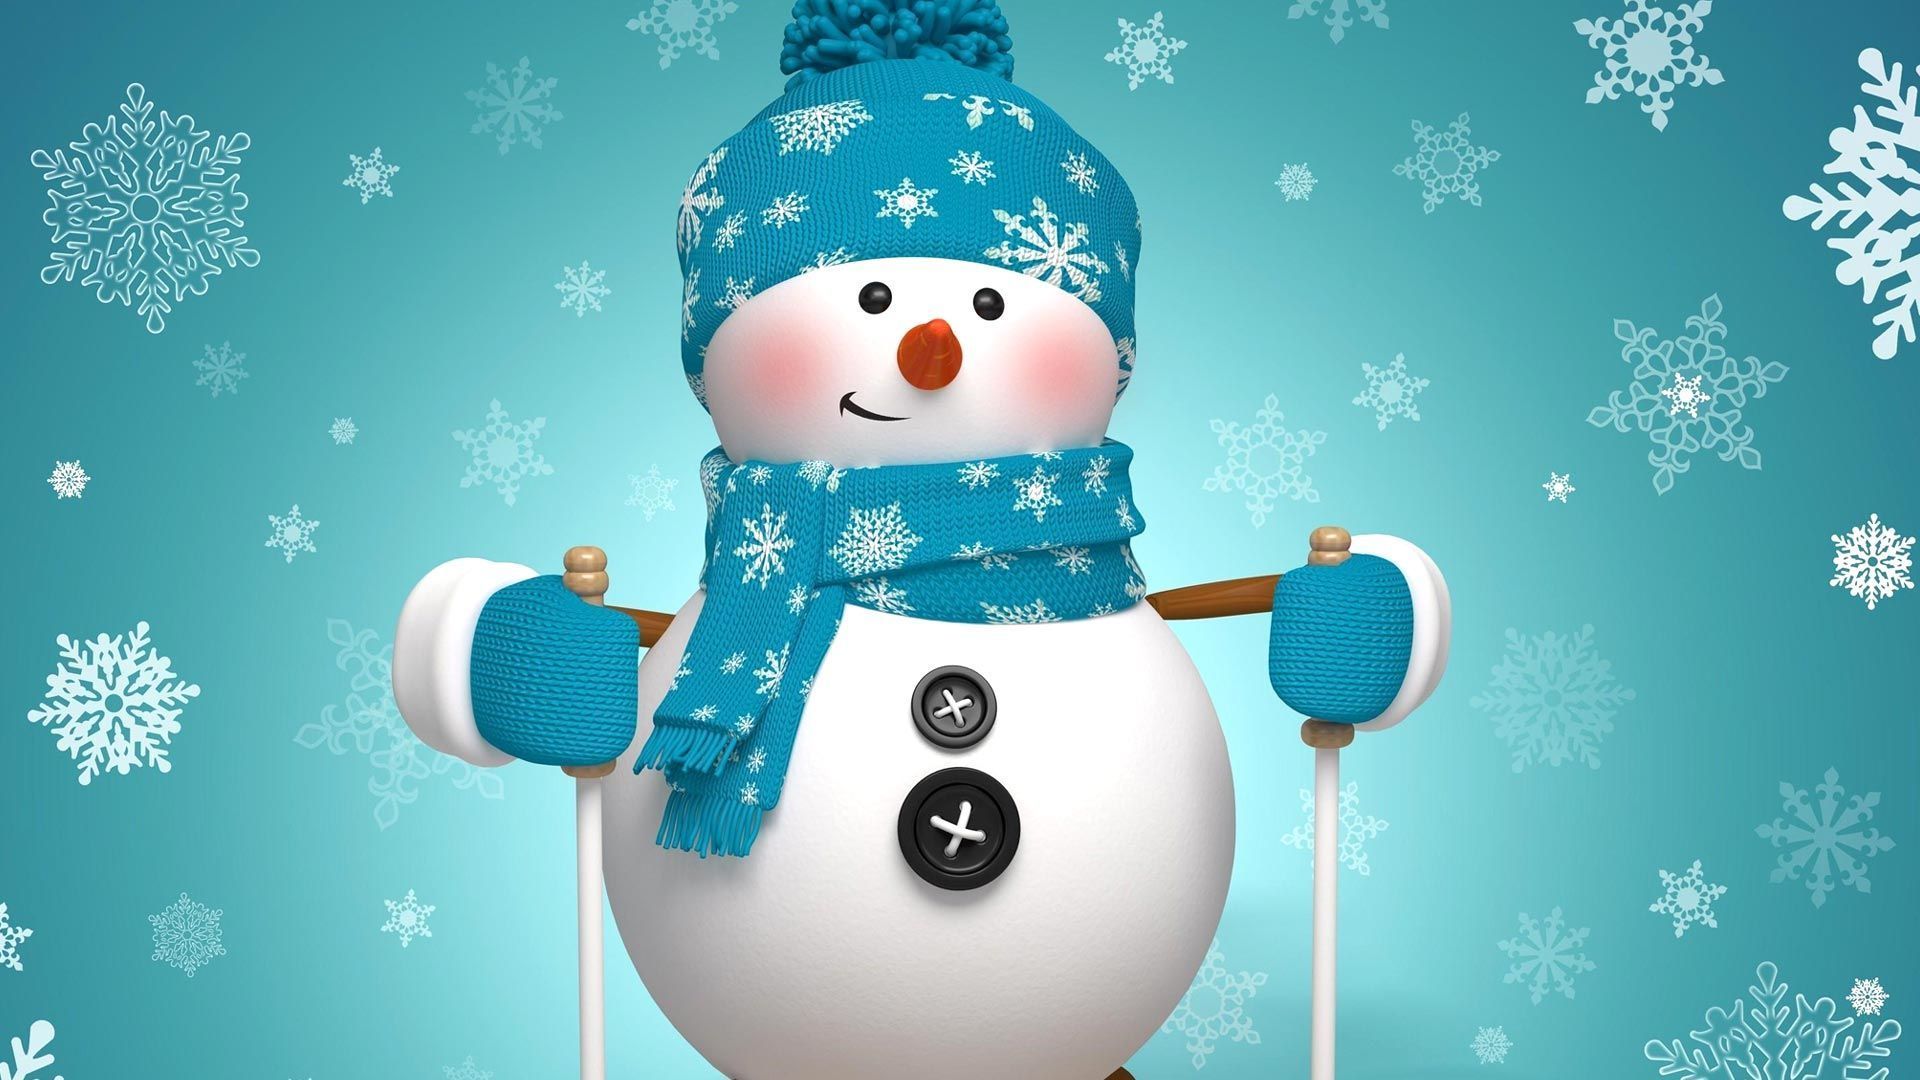 Cute snowman wallpaper – Free full hd wallpapers for 1080p desktop ...